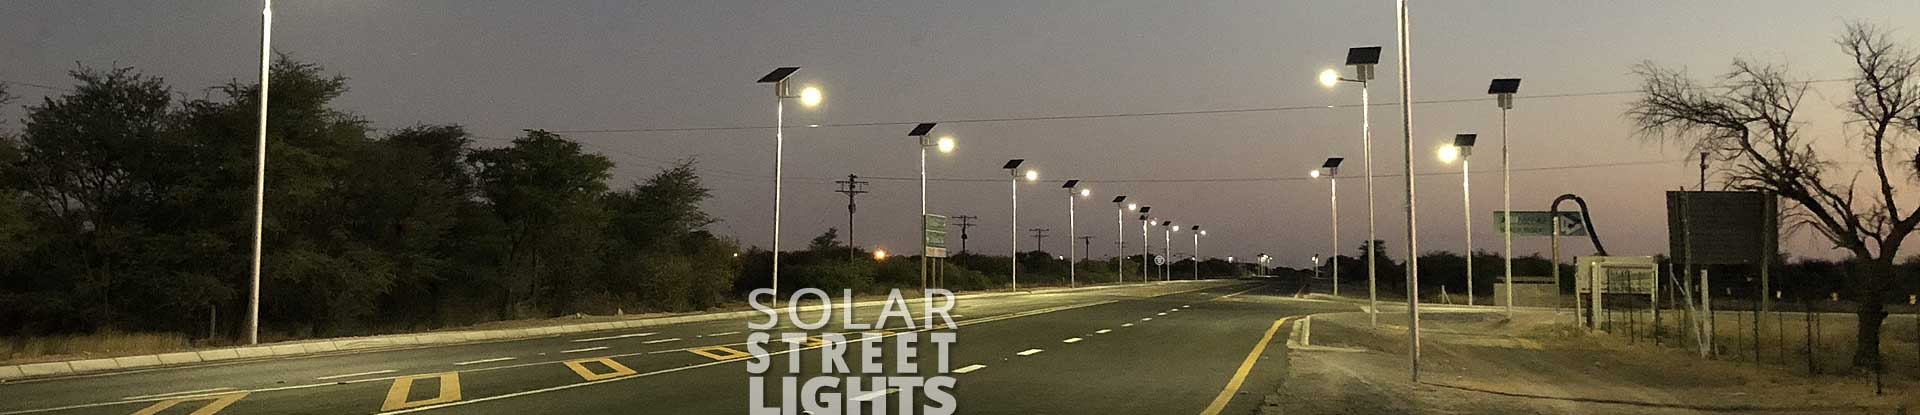 Solar Street Light System | Captain Polyplast Ltd.